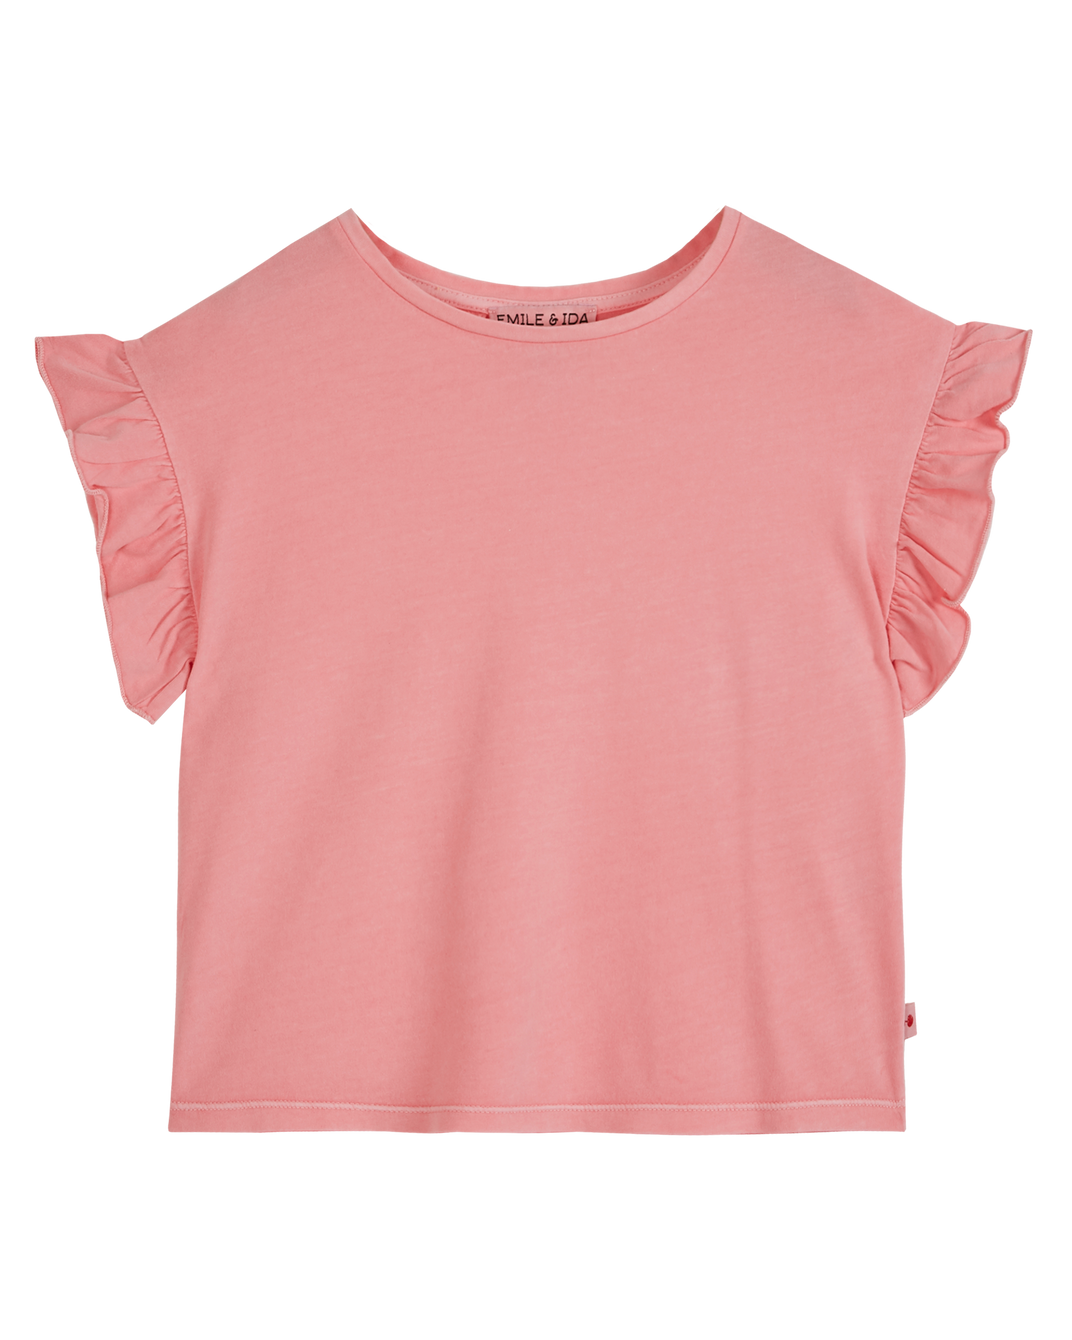 T-shirt coton et teinture bio fille magnolia